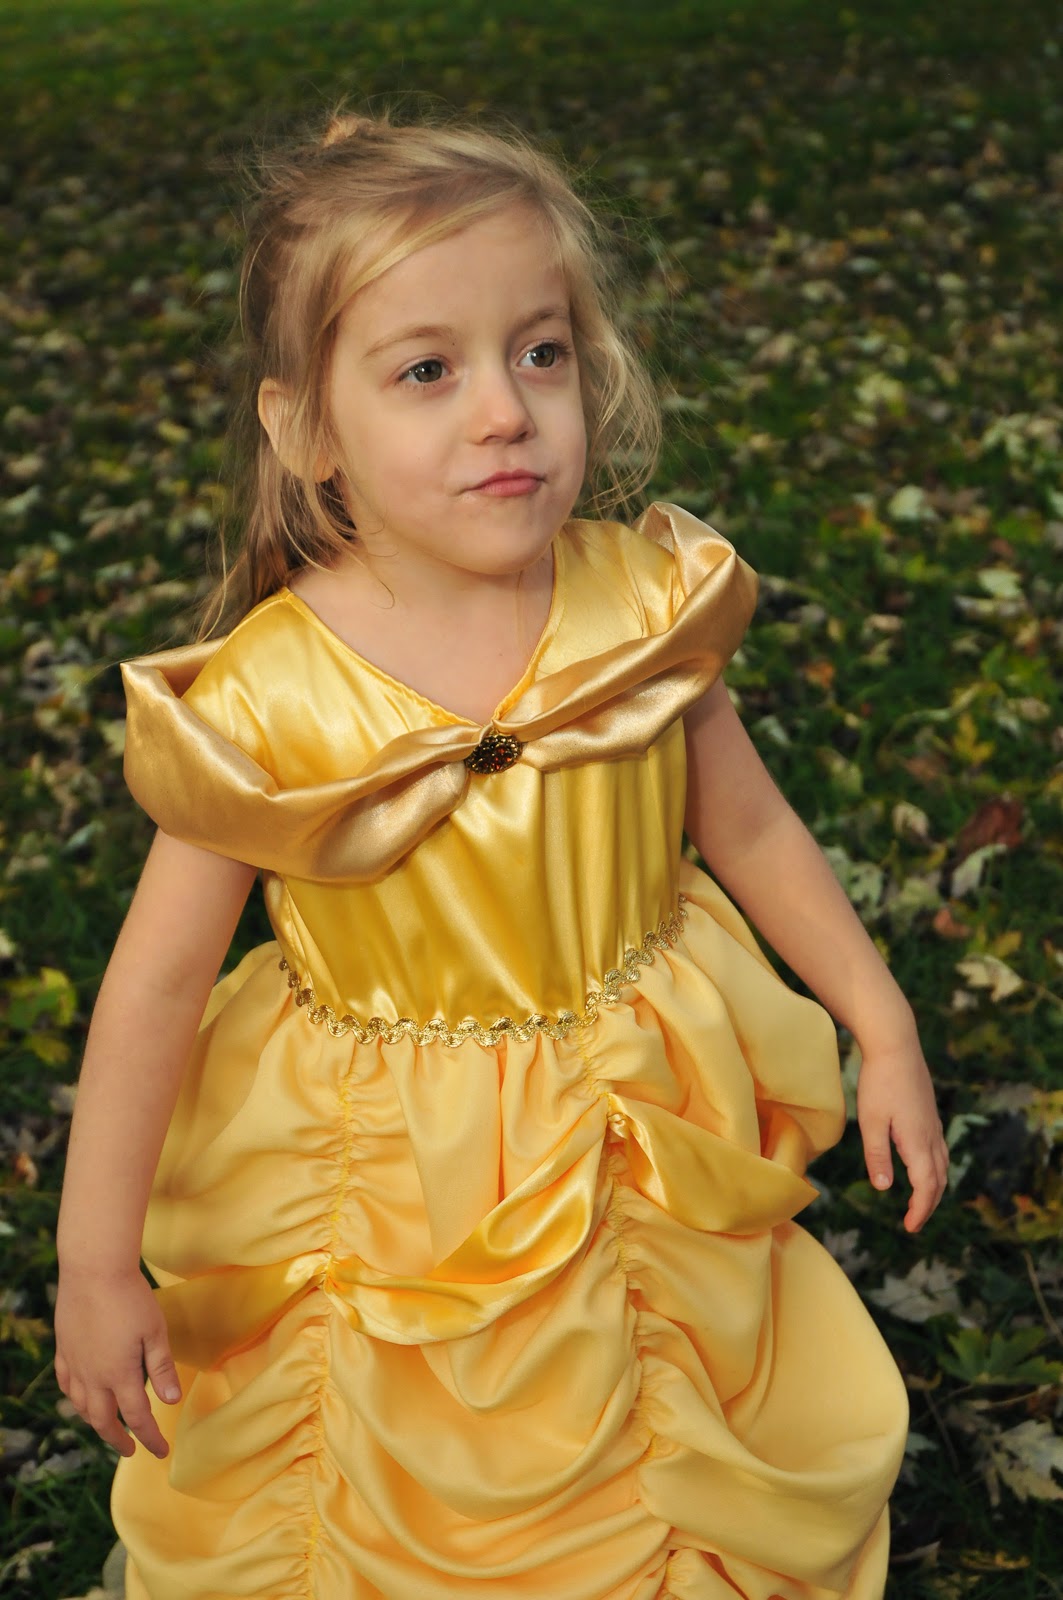 Two-many: Belle Dress